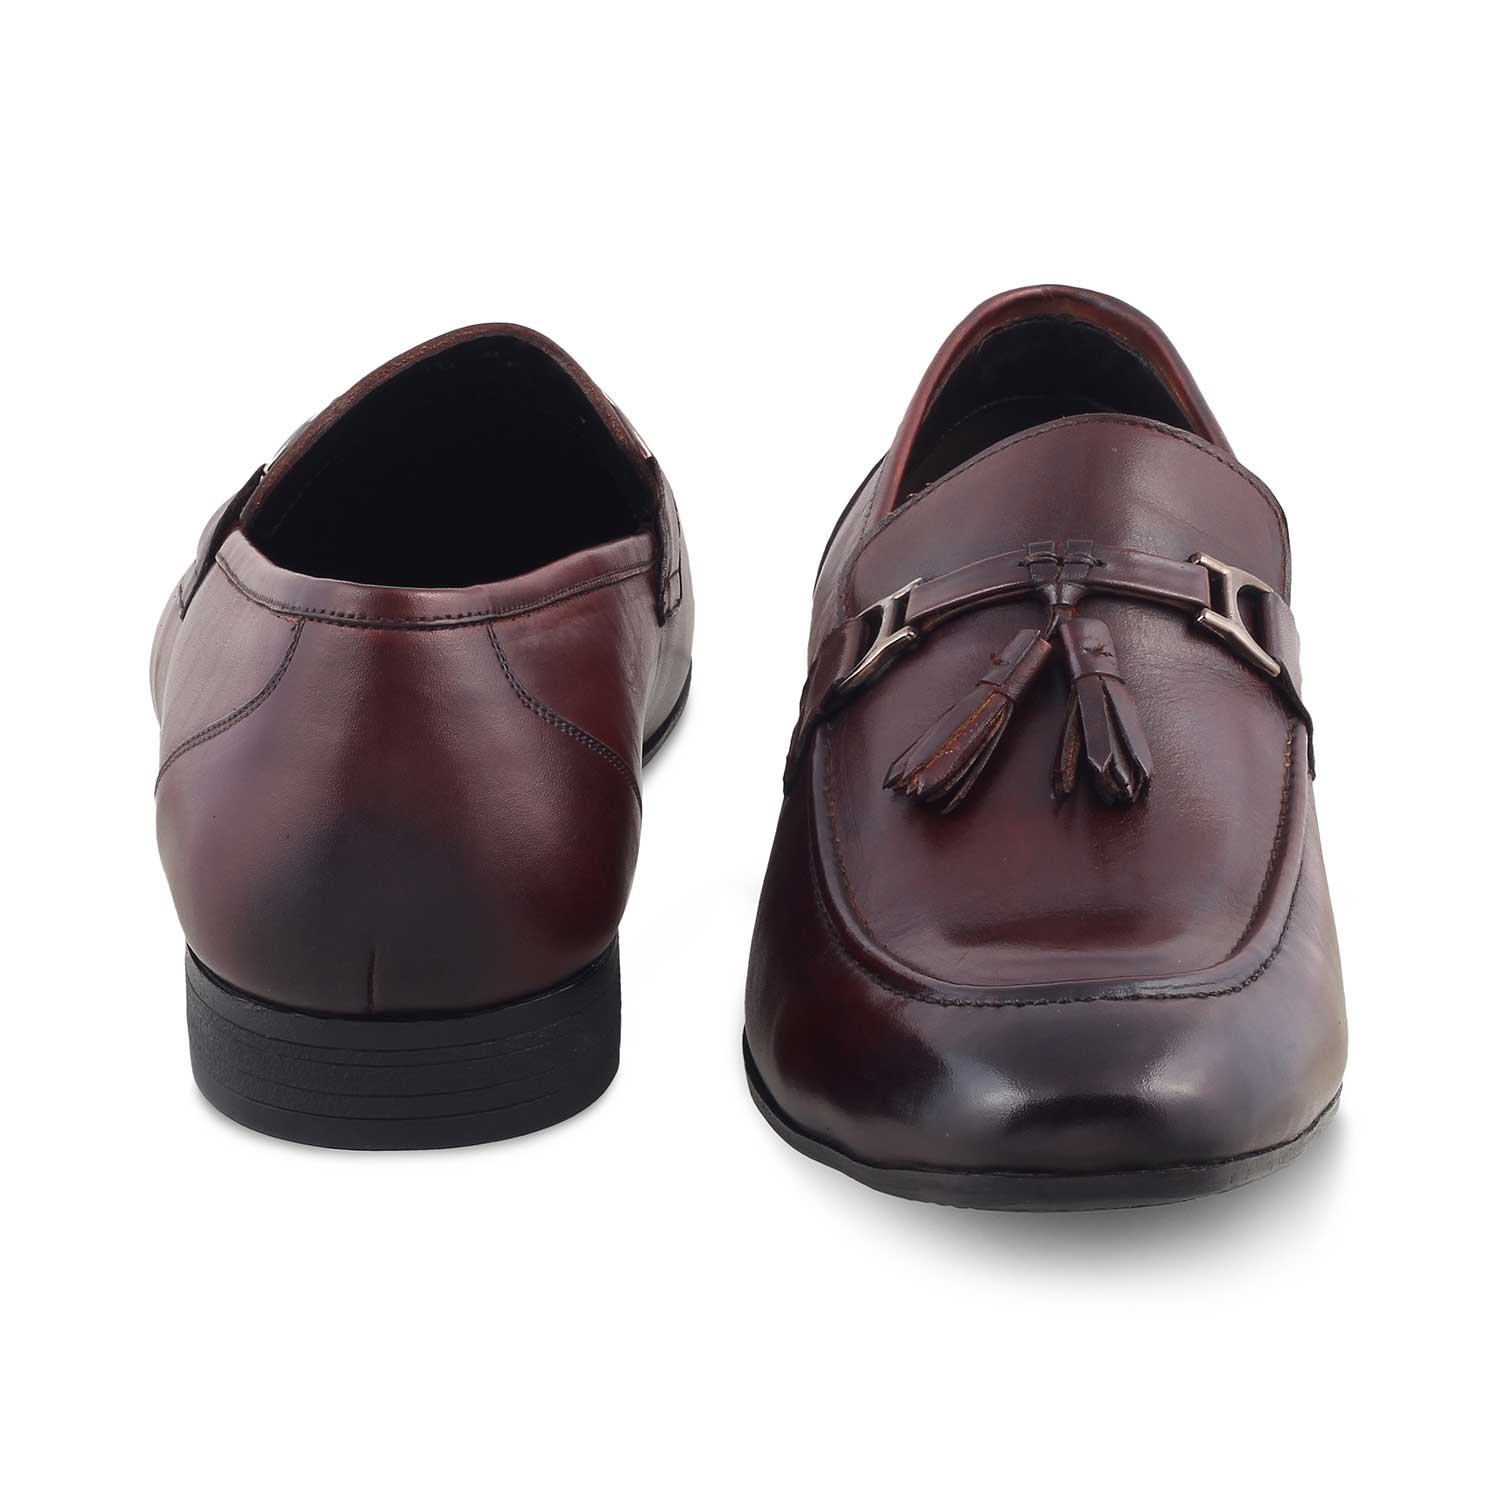 Tussle Brown Men's Leather Tassel Loafers Online at Tresmode.com